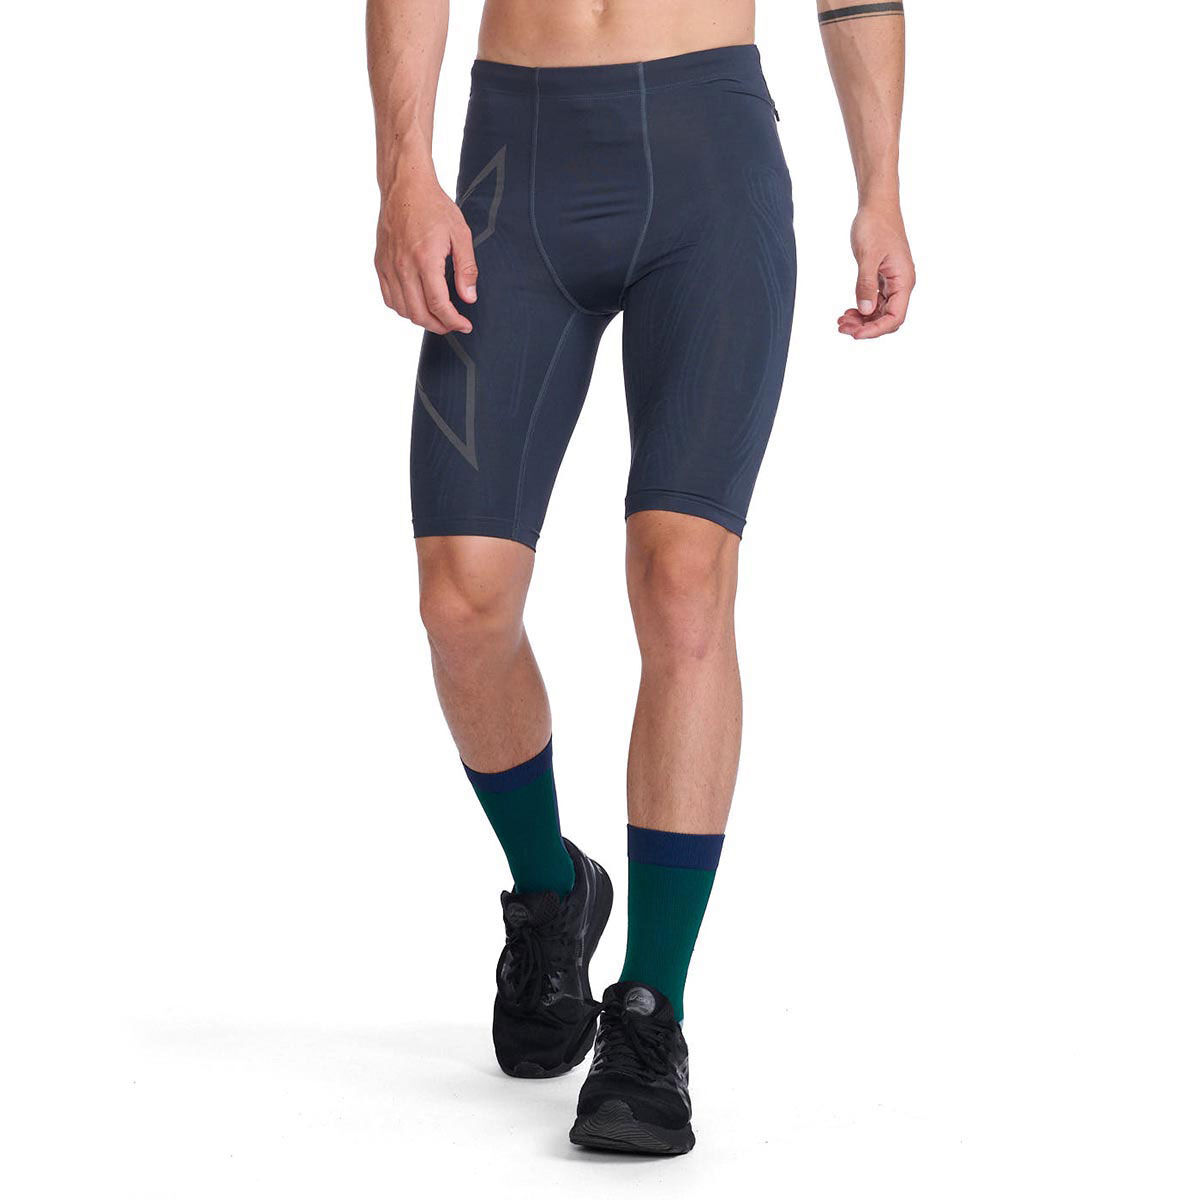 Men's Light Speed Compression Shorts, Ultra360